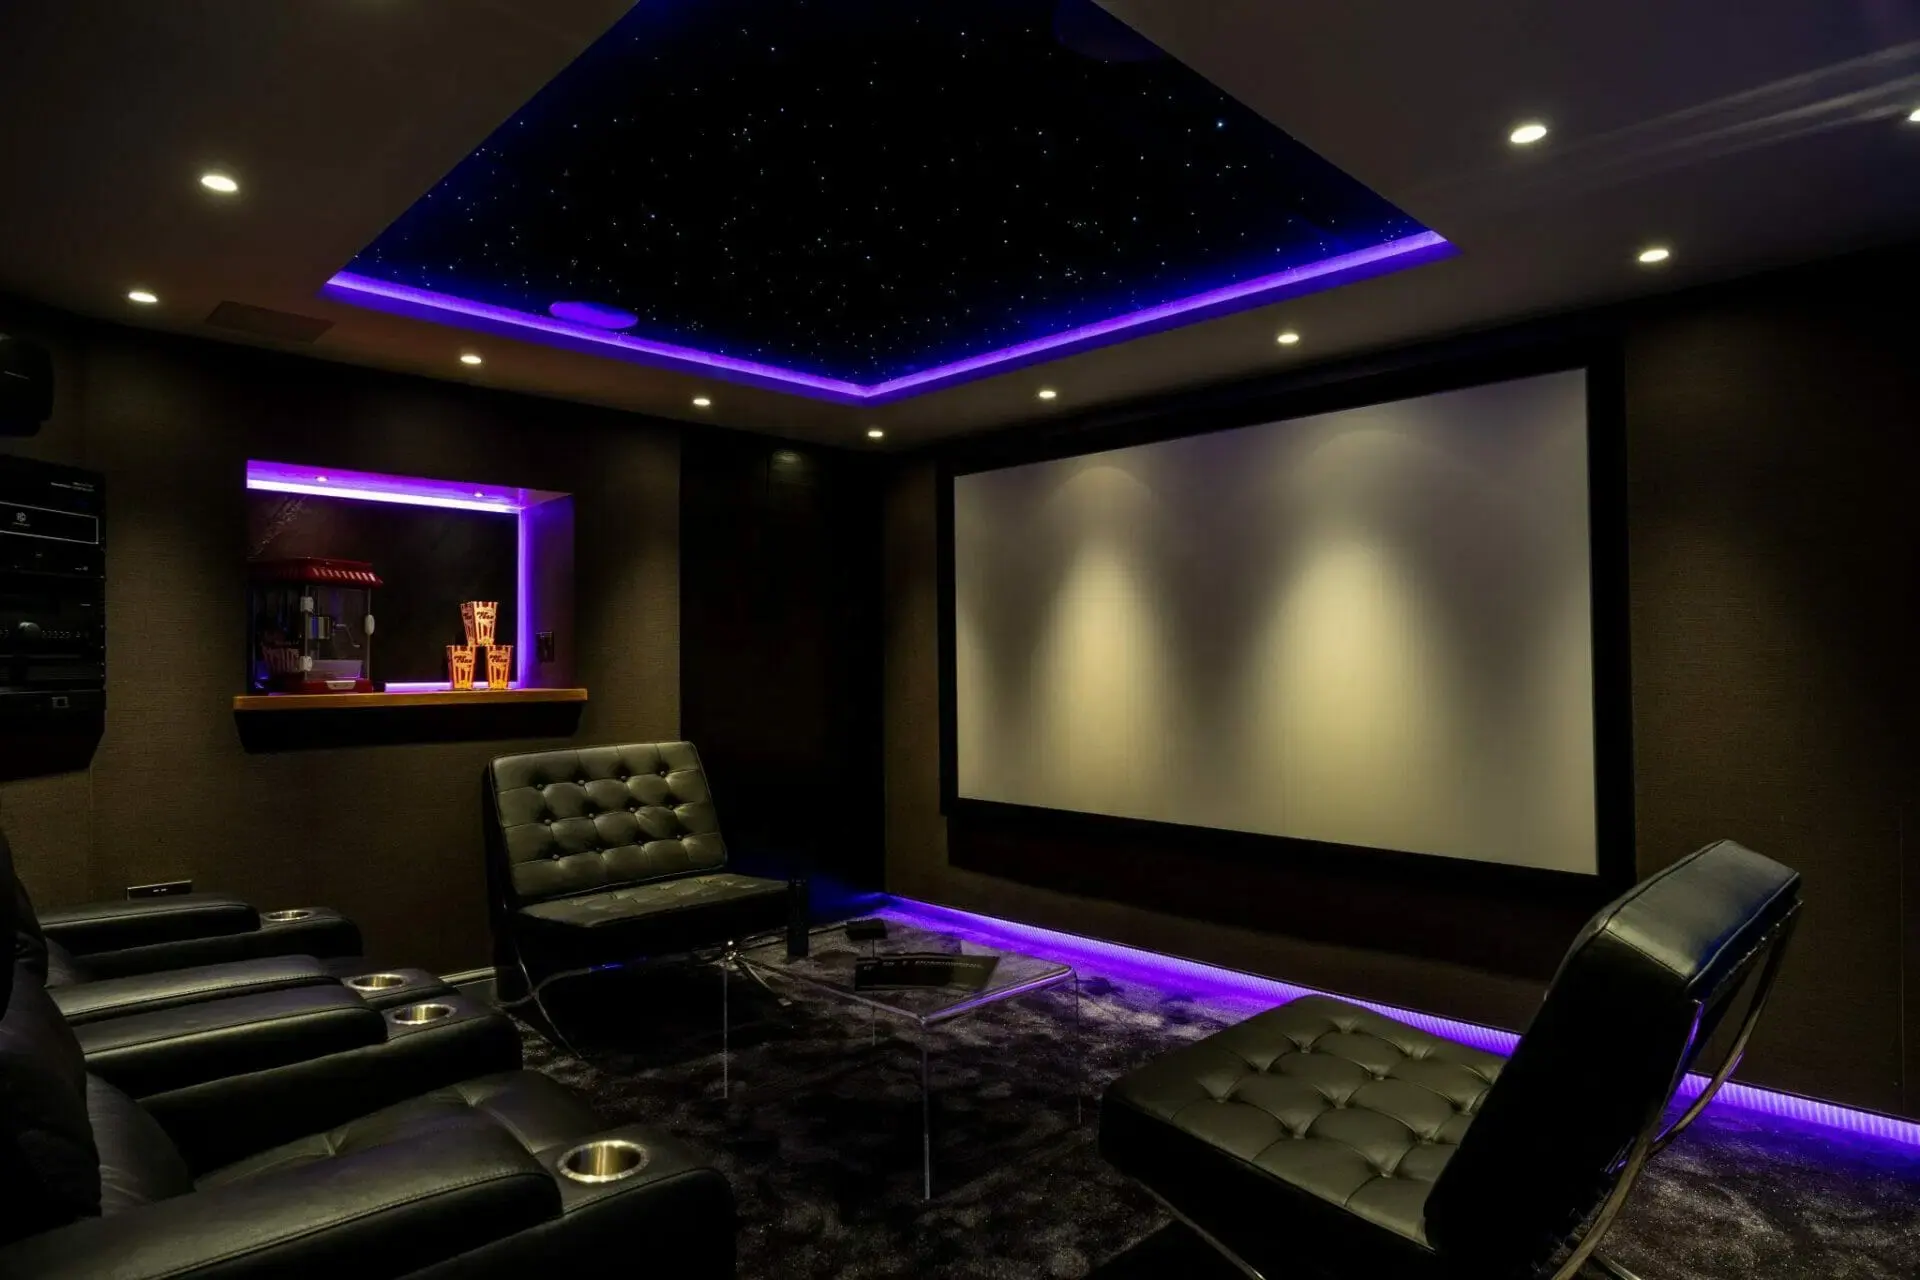 CUSTOM FIBRE OPTIC STAR CEILINGS for Home theatres or Living room fiber optic light ceiling panels